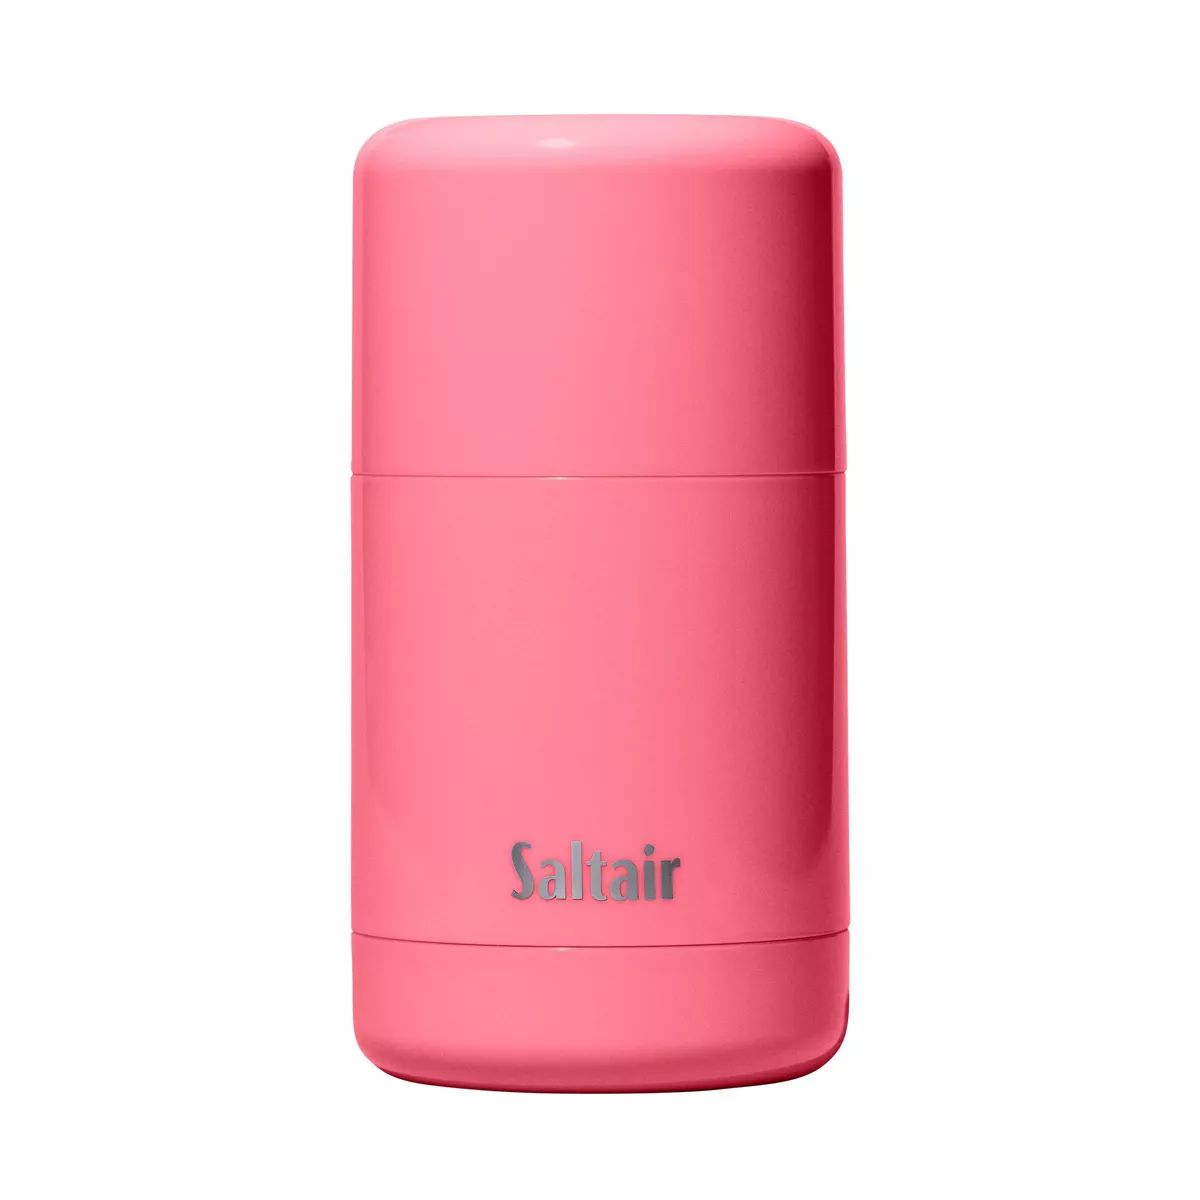 Saltair Pink Beach Skincare Deodorant - Coconut Scent - 1.76oz | Target